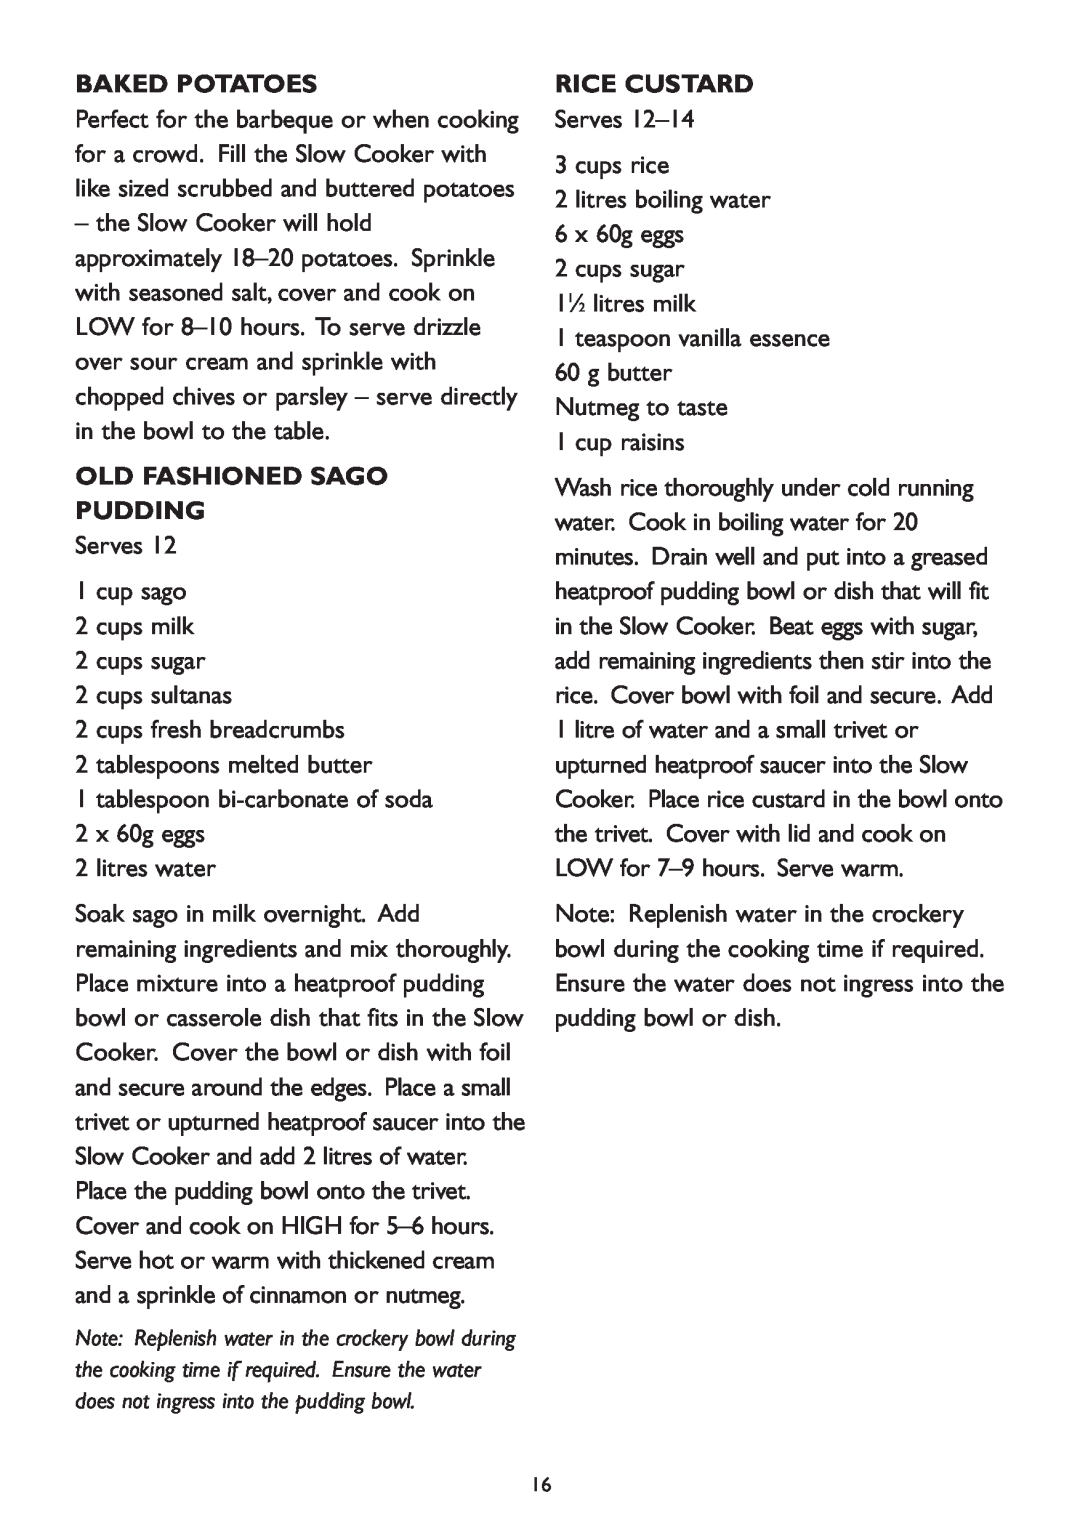 Kambrook KSC 100 manual Baked Potatoes, Old Fashioned Sago Pudding, Rice Custard 